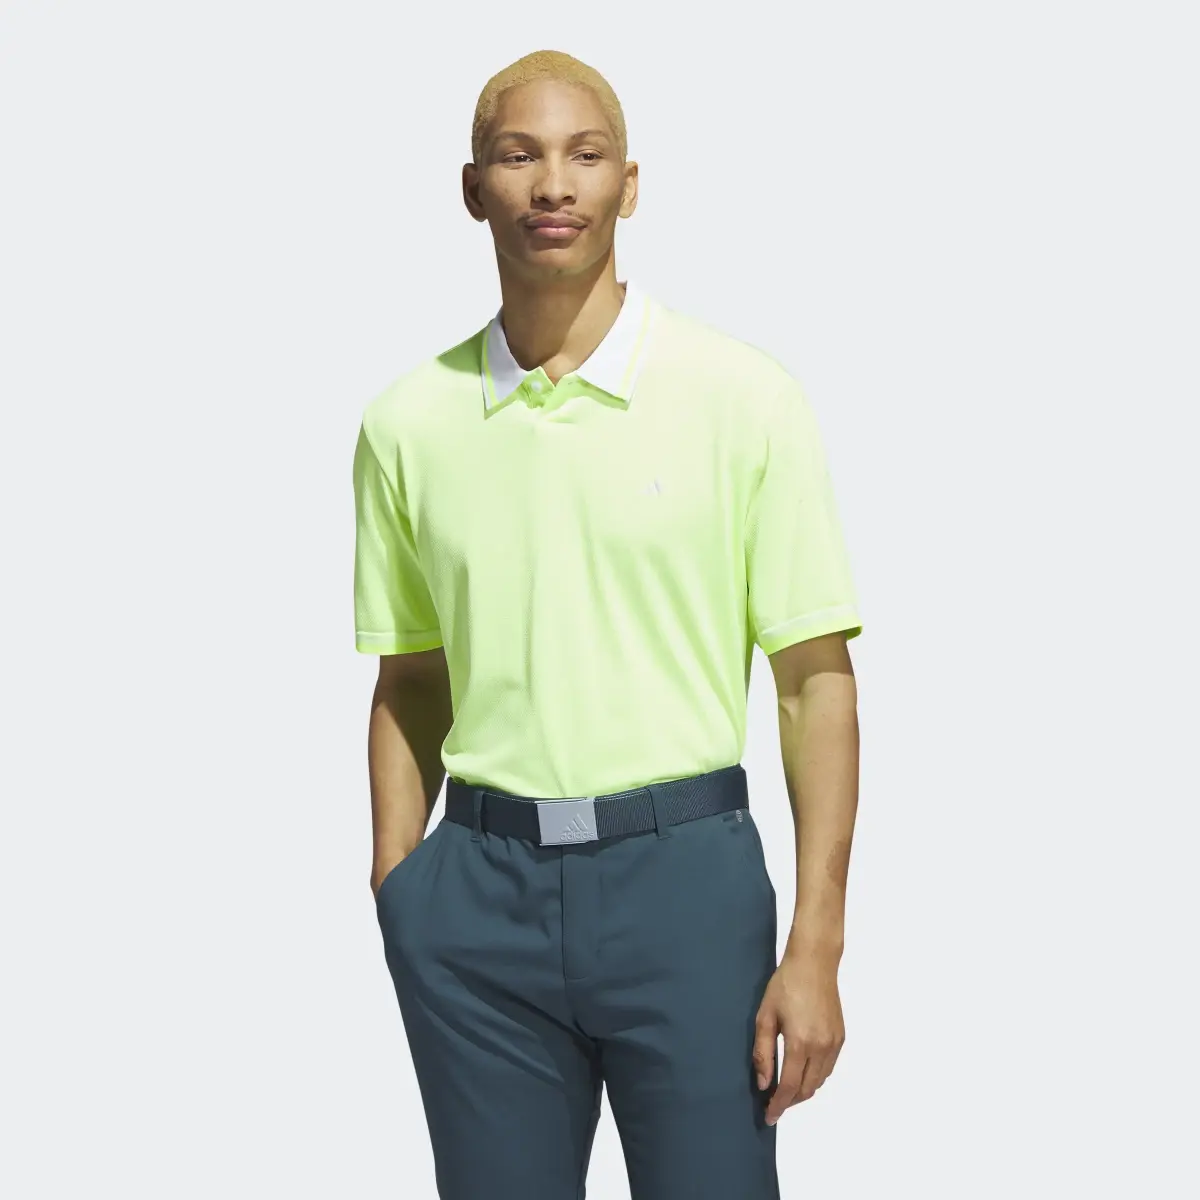 Adidas Ultimate365 Tour PRIMEKNIT Golf Polo Shirt. 2